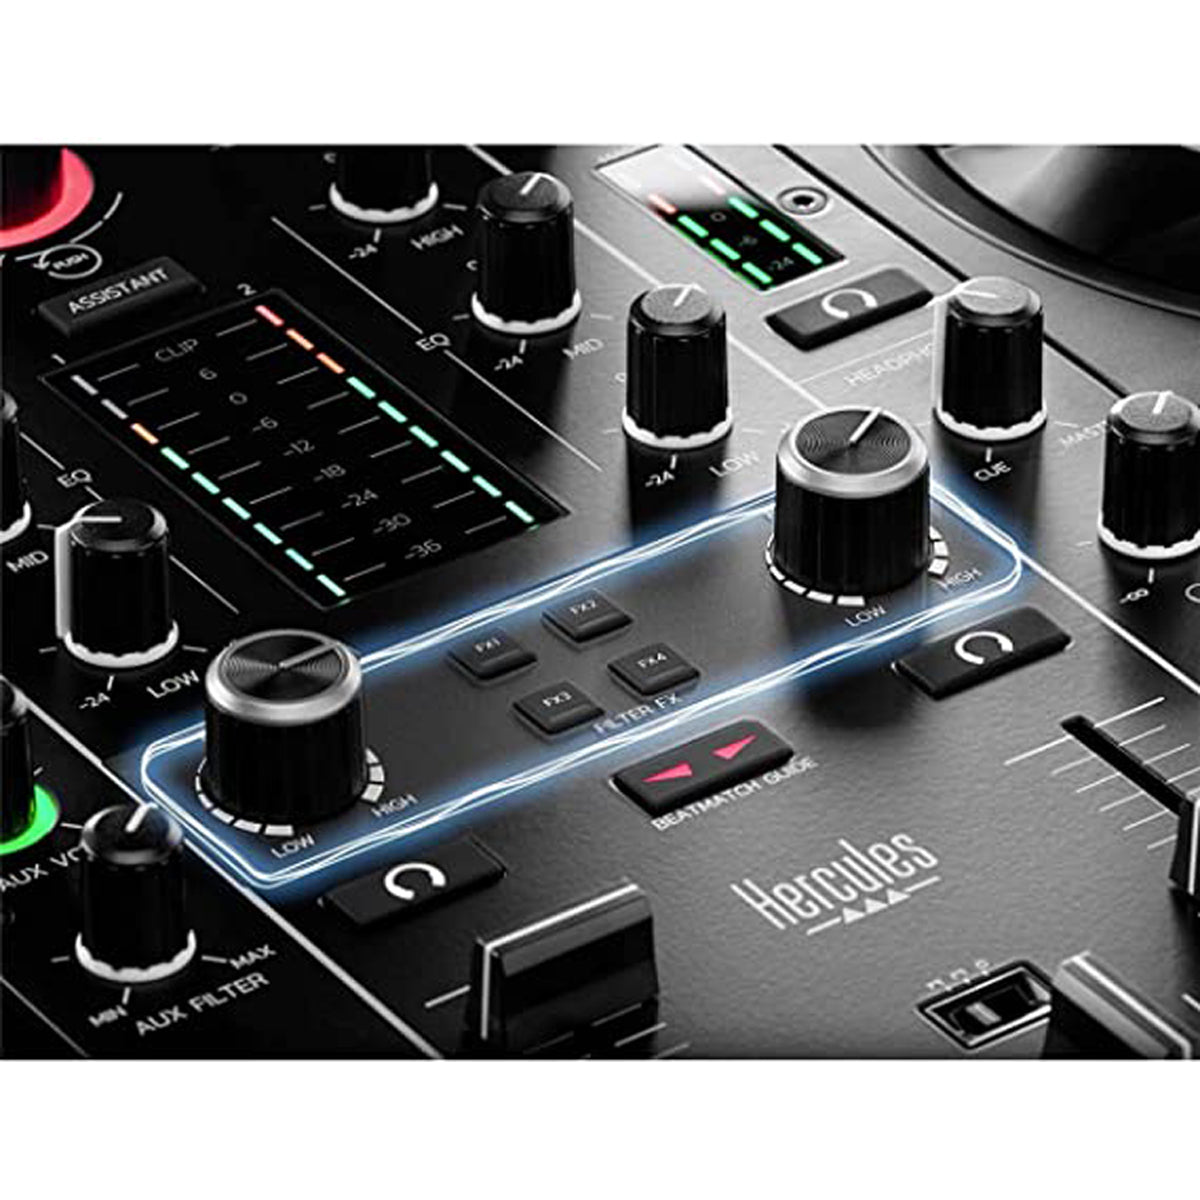 Thrustmaster Hercules DJControl Inpulse 500 2-deck USB DJ controller for Serato.